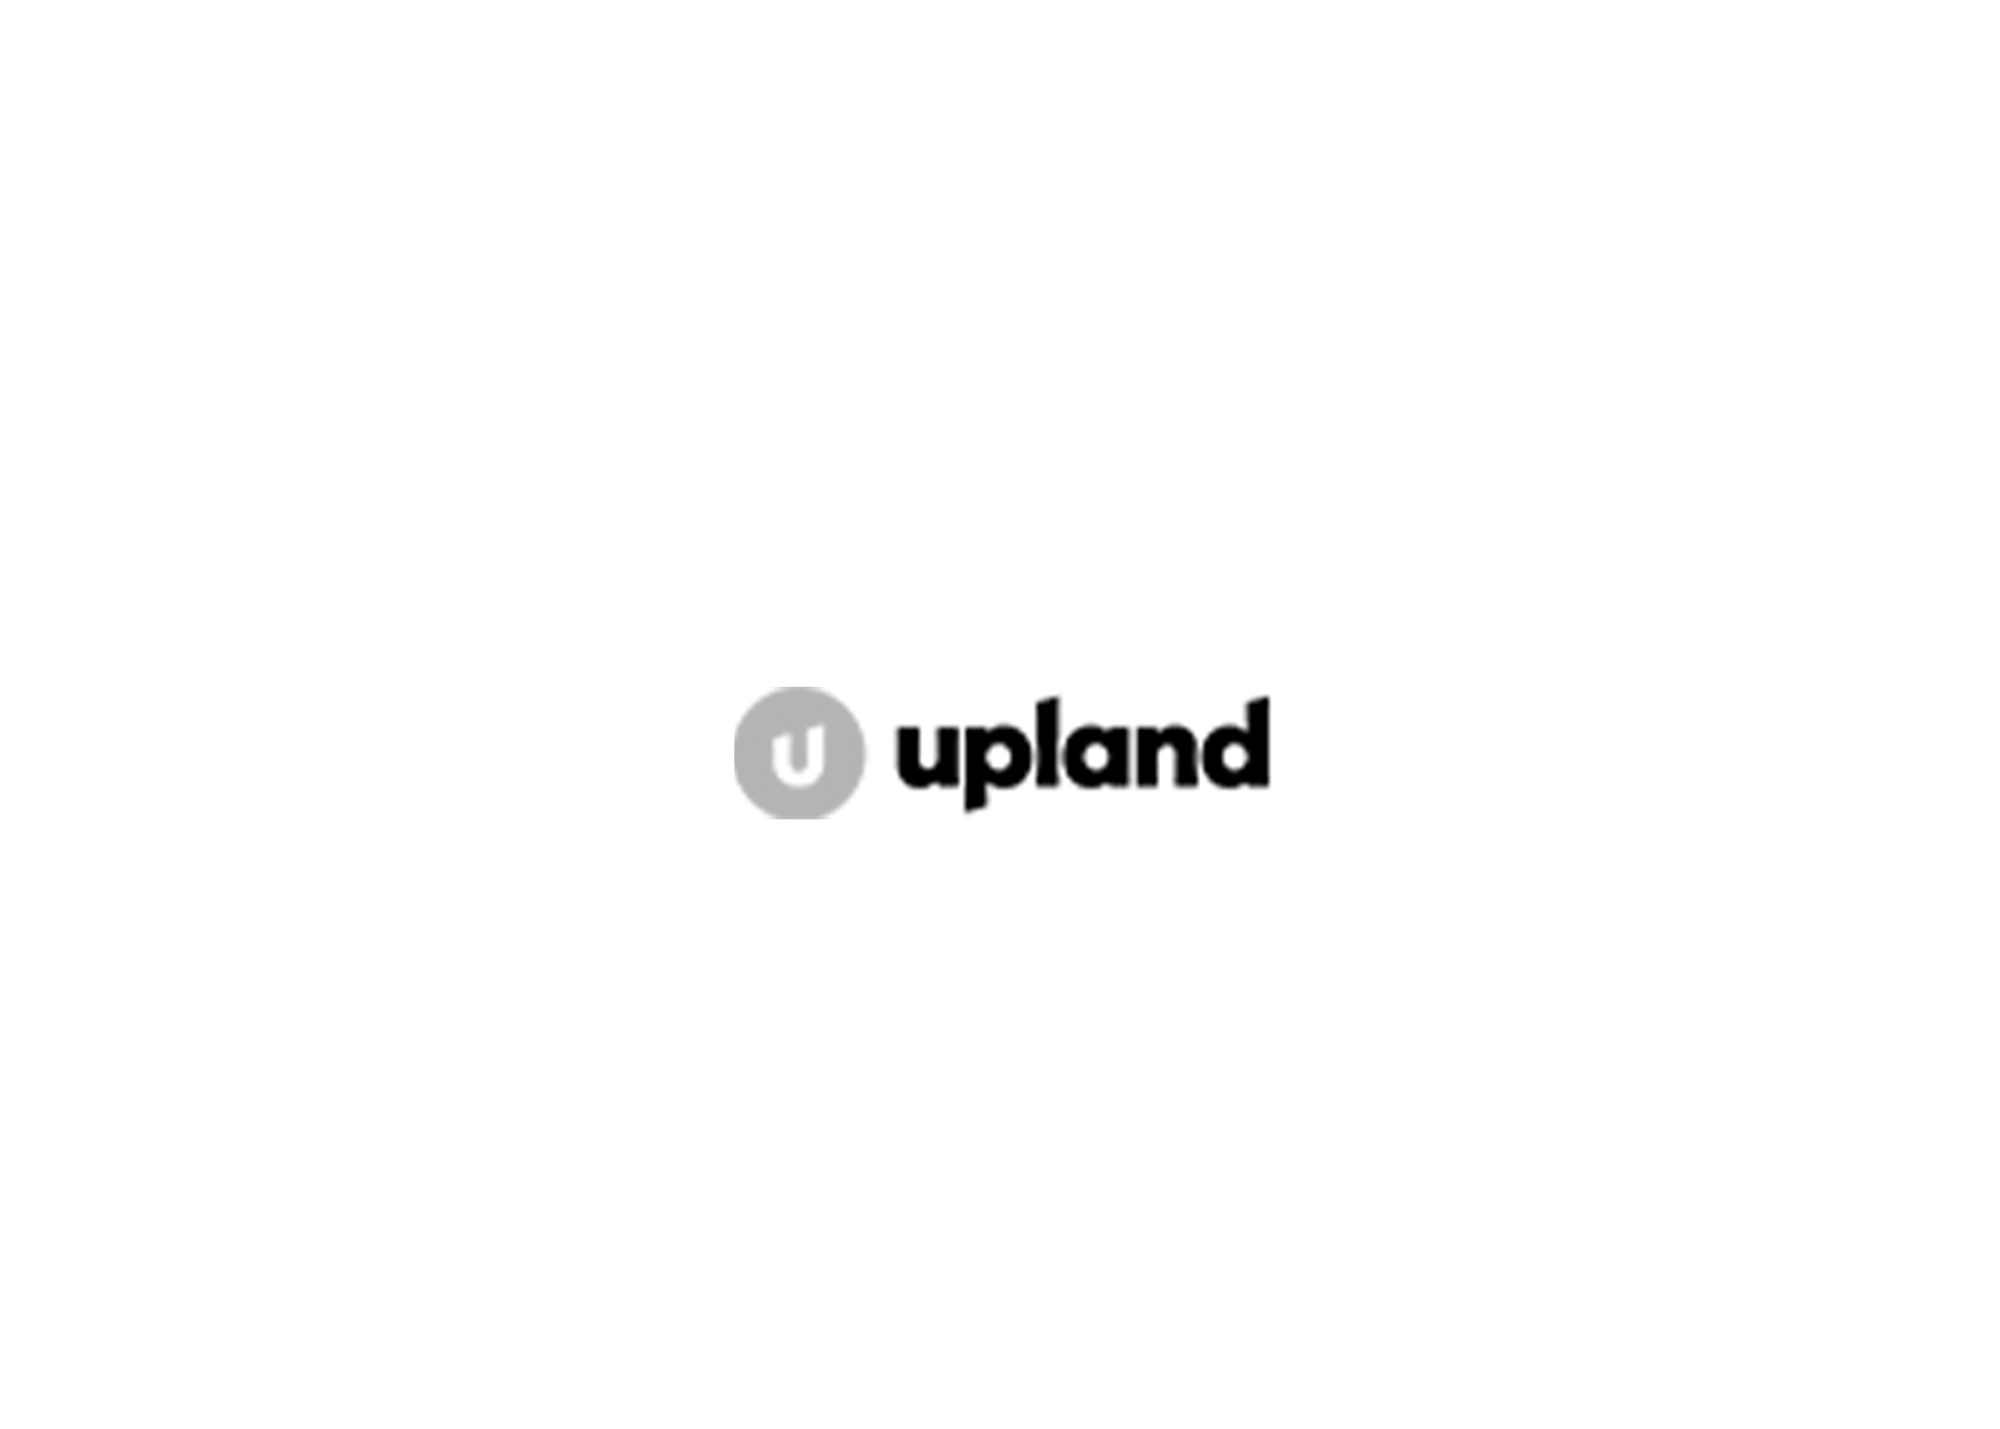 upland-grey.png